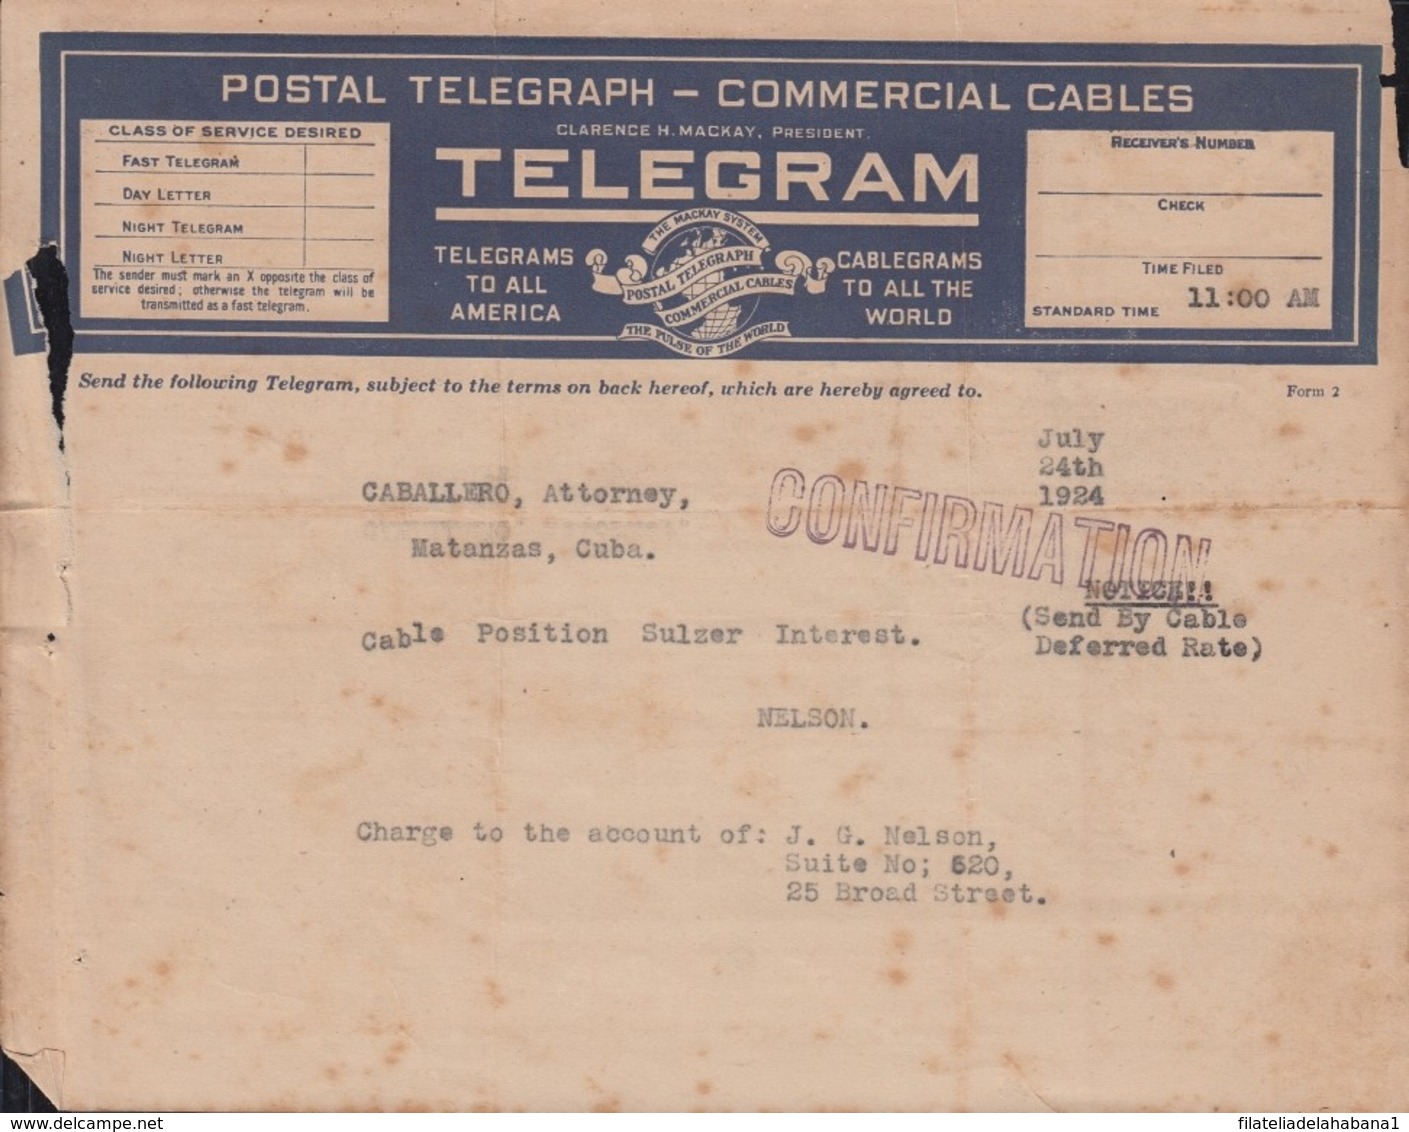 TELEG-274 CUBA (LG1507) REPUBLIC TELEGRAM TELEGRAPH 2 MODELOS DE TELEGRAMA - Telégrafo